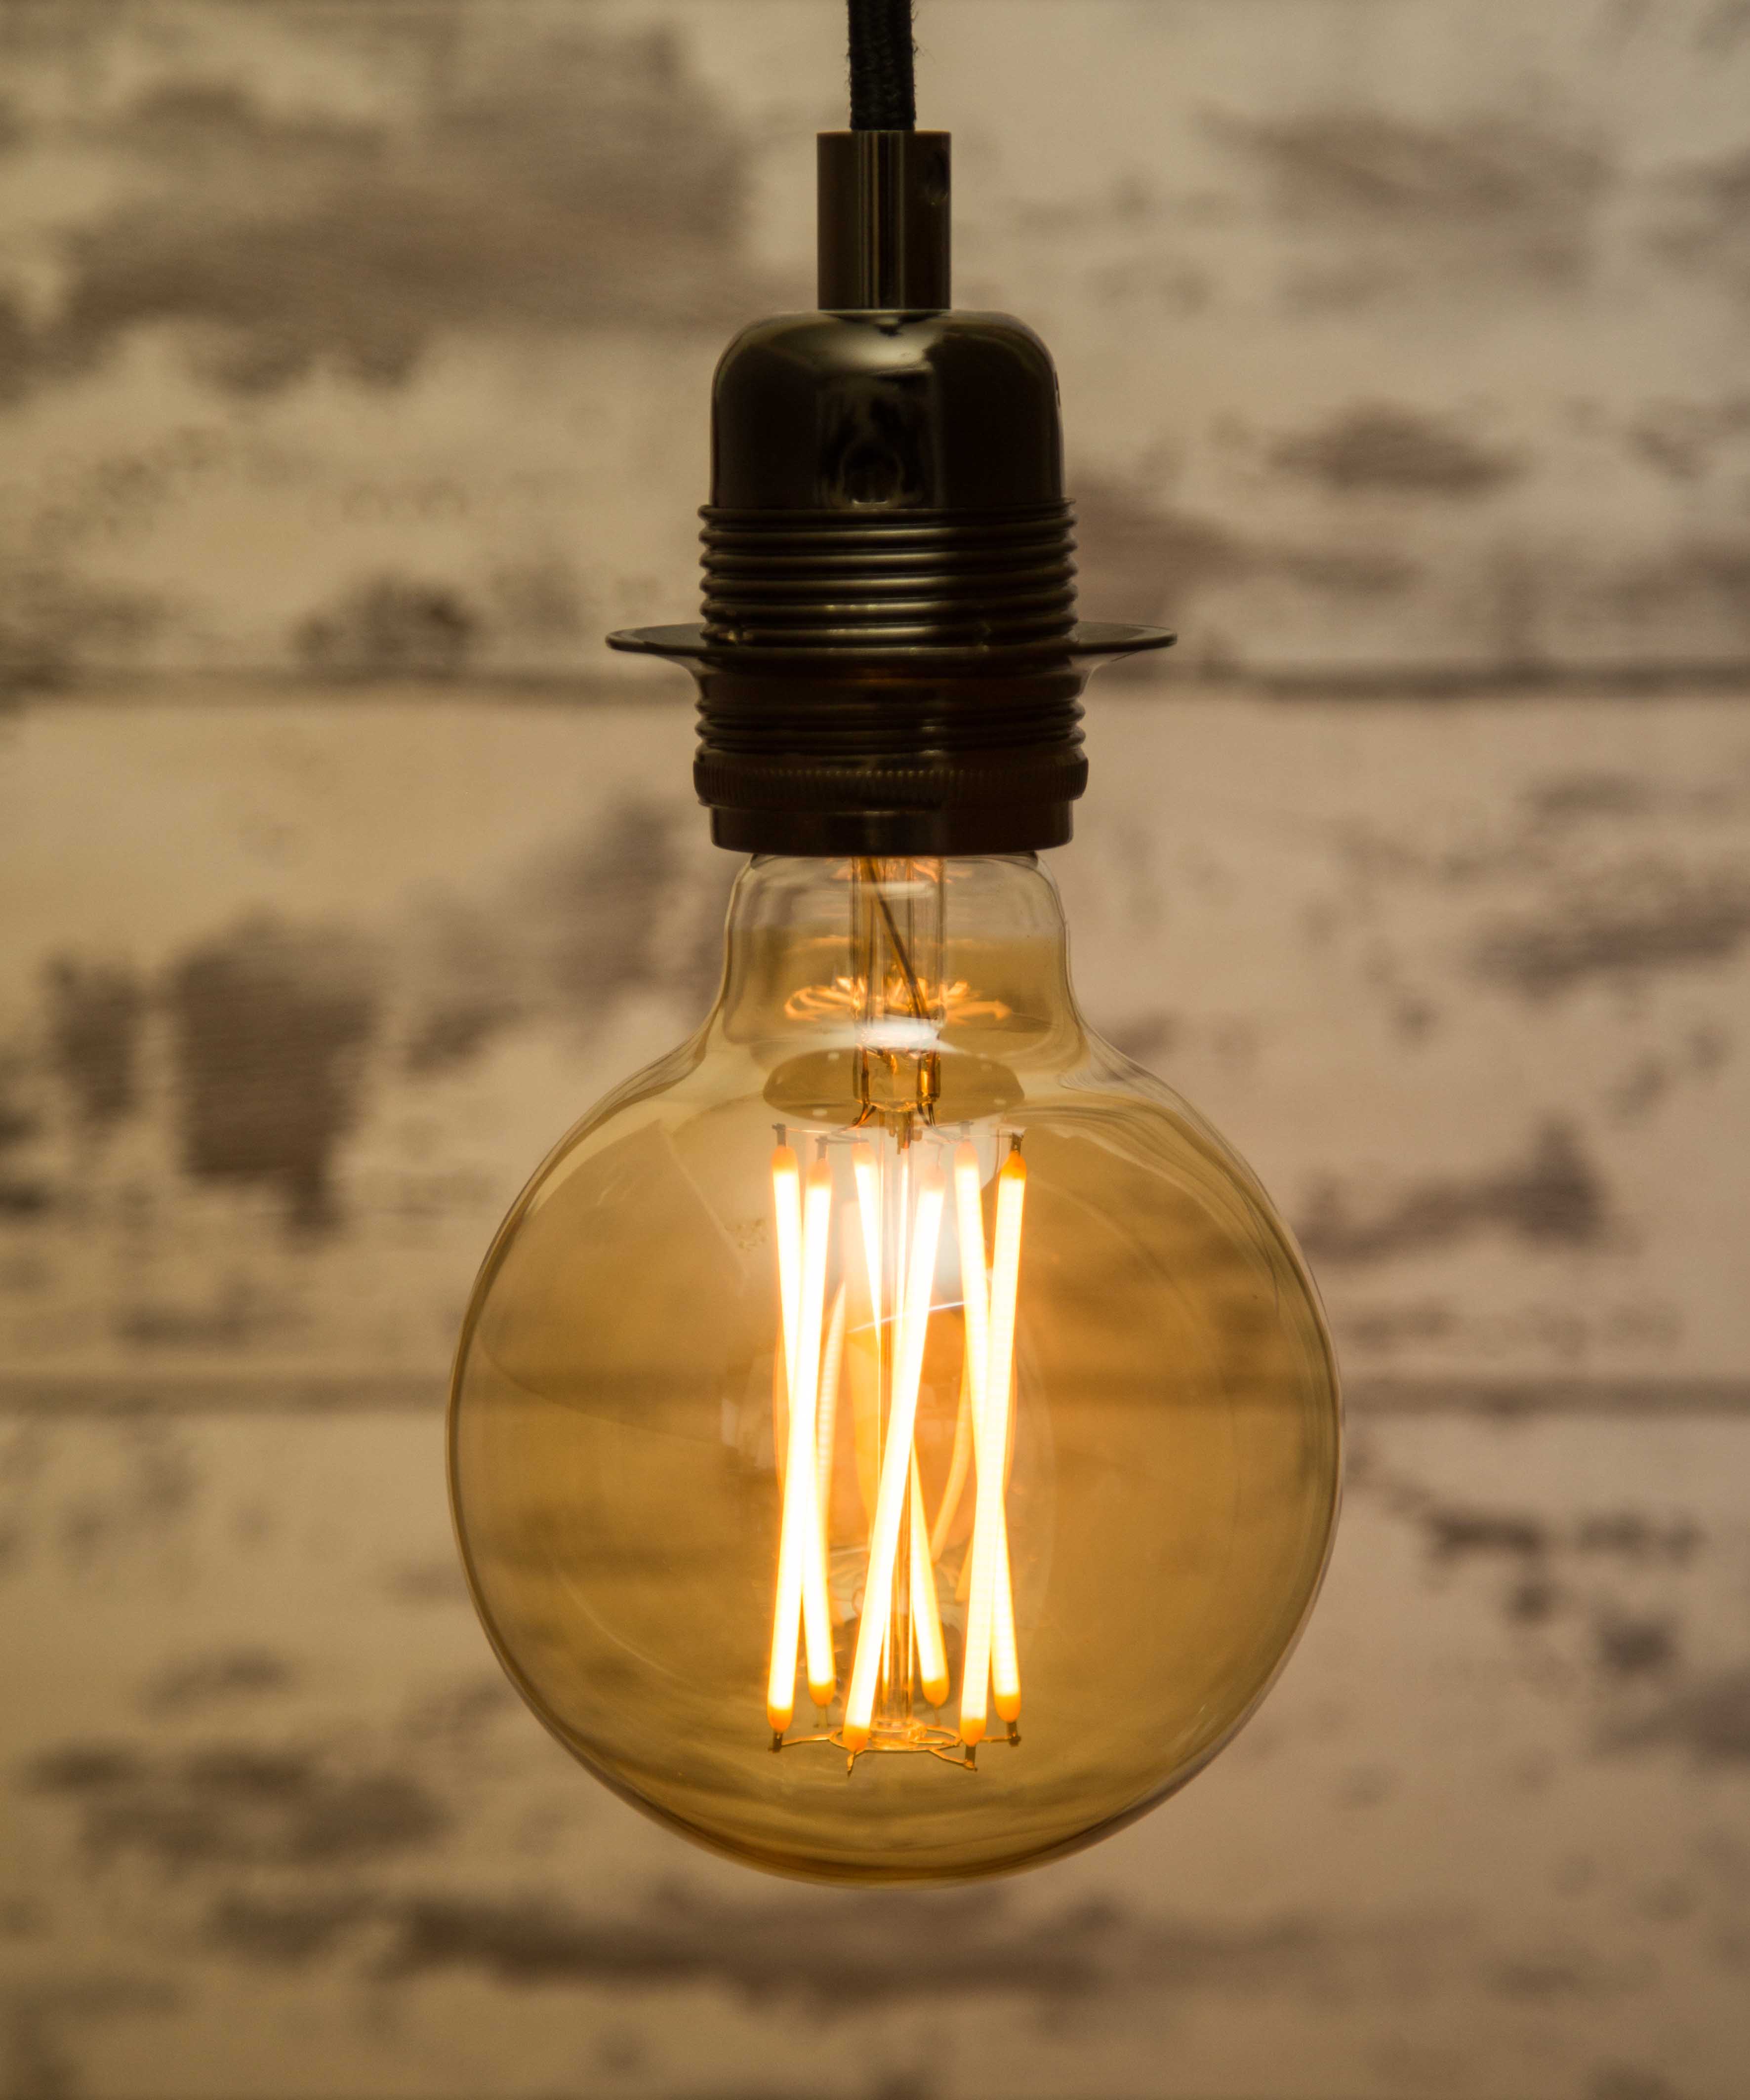 Filament led light bulbs